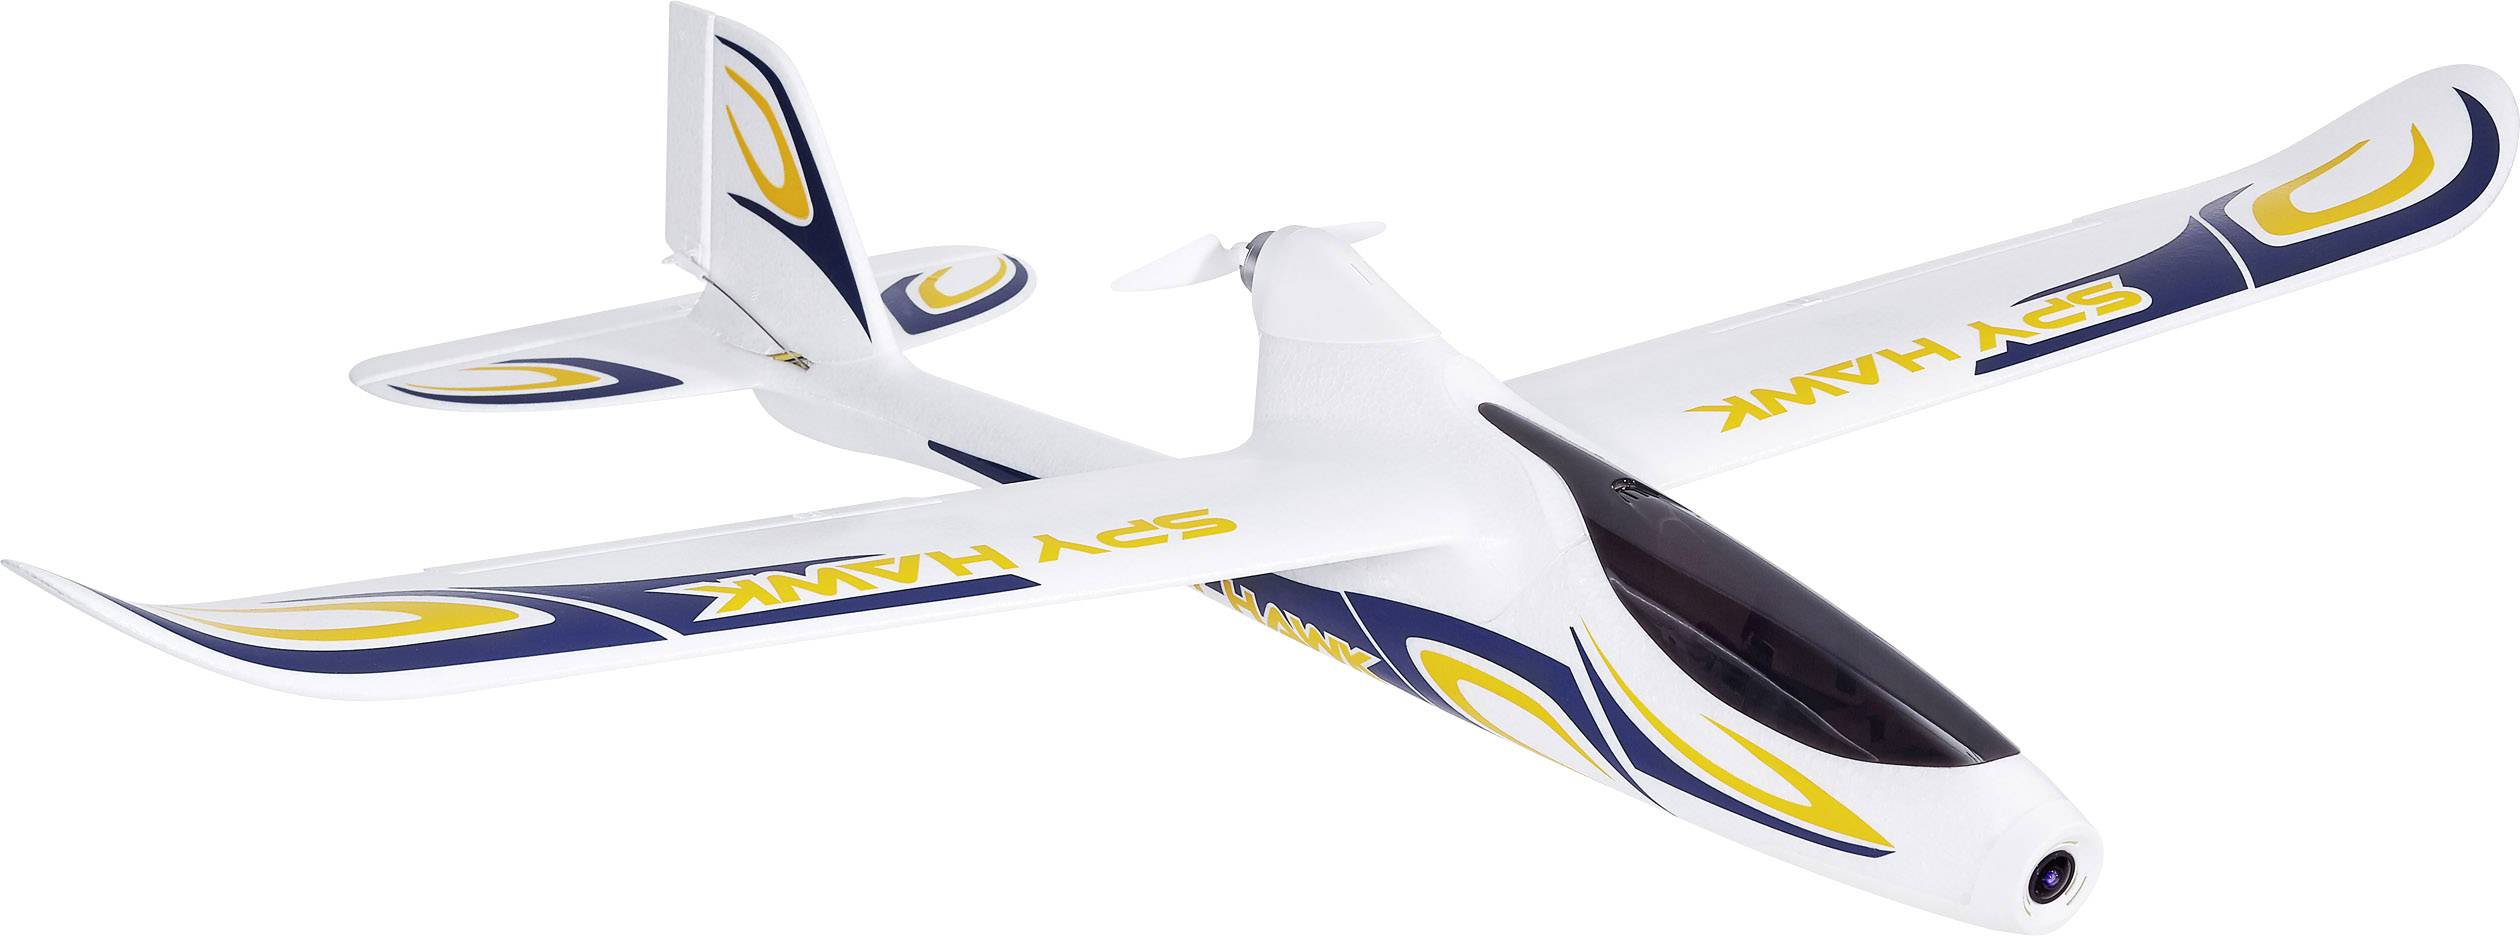 Hubsan Spy Hawk RC model glider RtF 1000 mm | Conrad.com